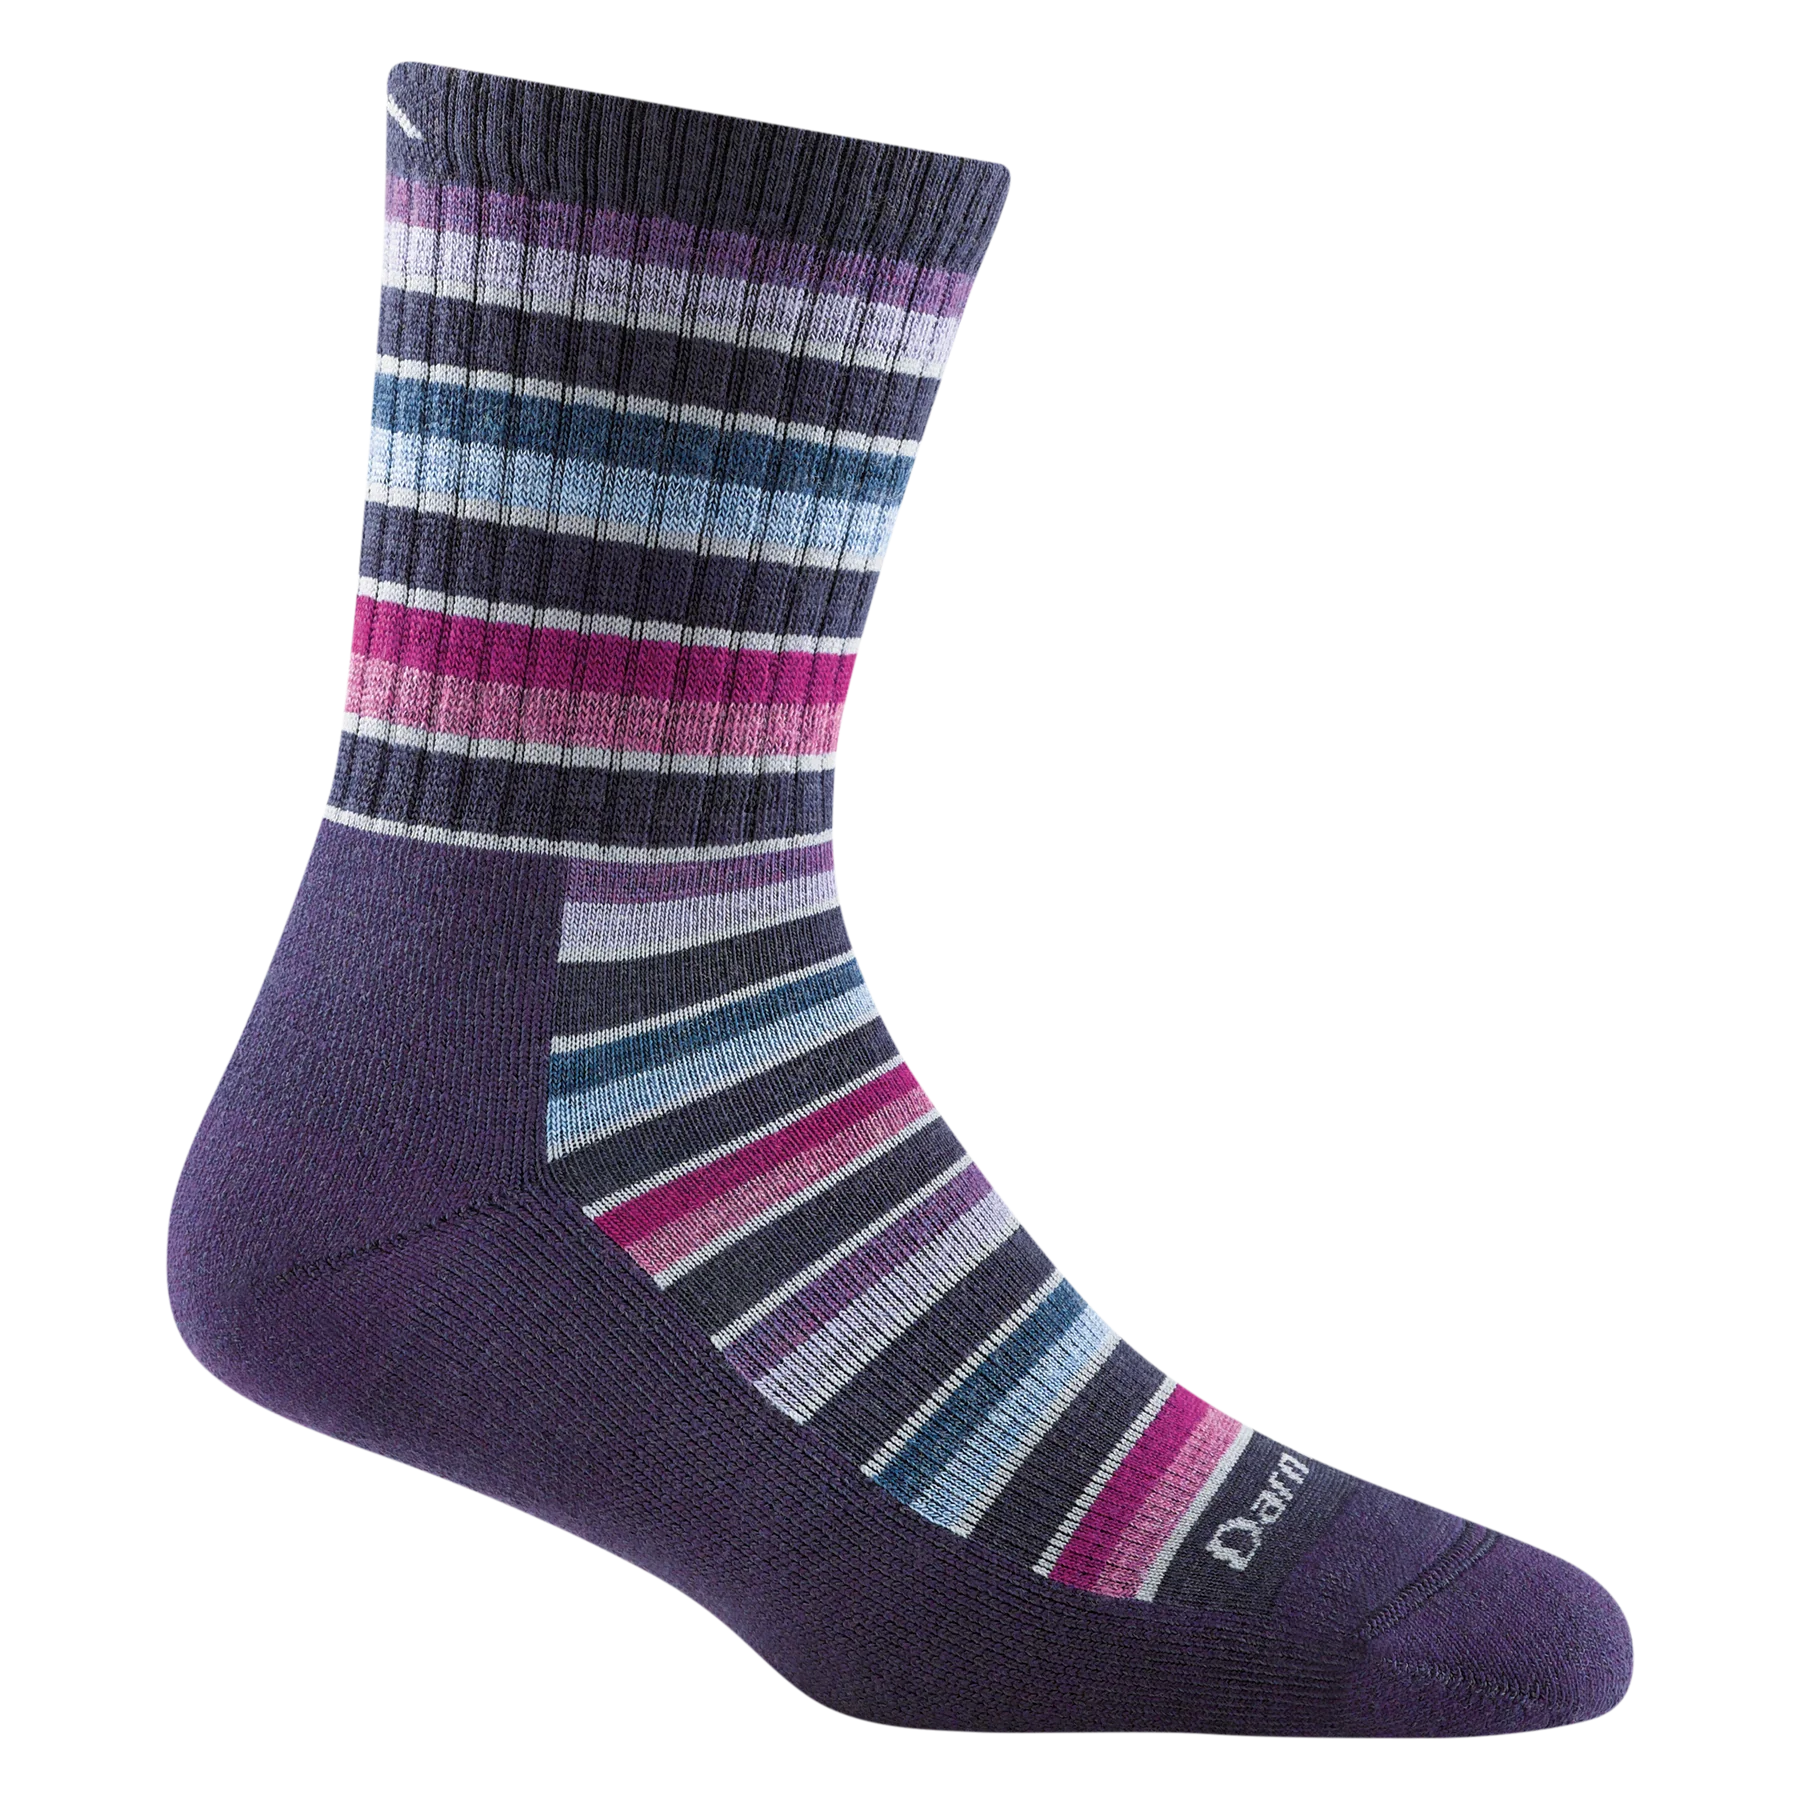 Darn tough blackberry sock with burgundy, blue, black stripes & burgundy toe and heel